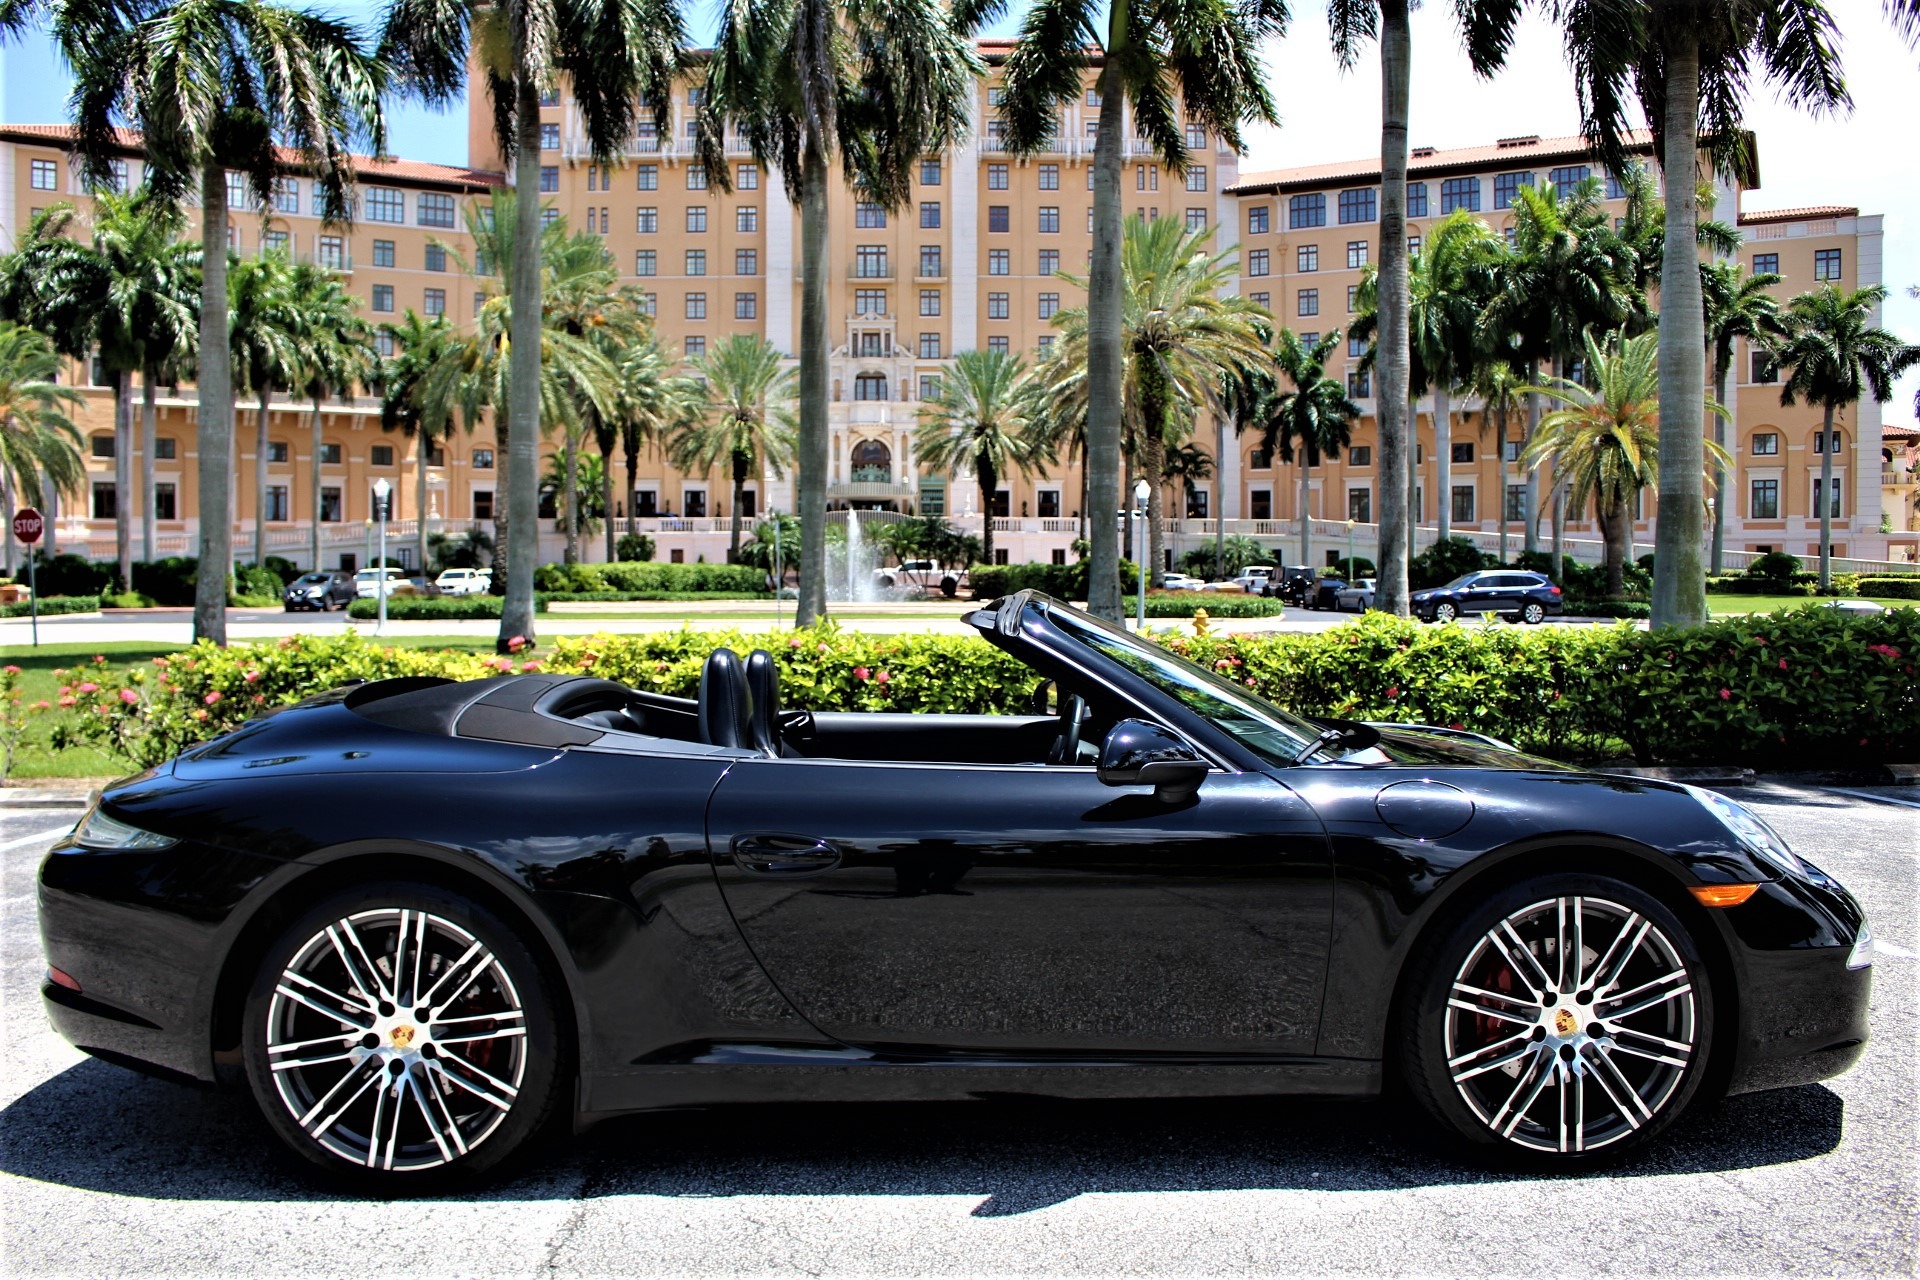 Used 2016 Porsche 911 Carrera Black Edition for sale Sold at The Gables Sports Cars in Miami FL 33146 3